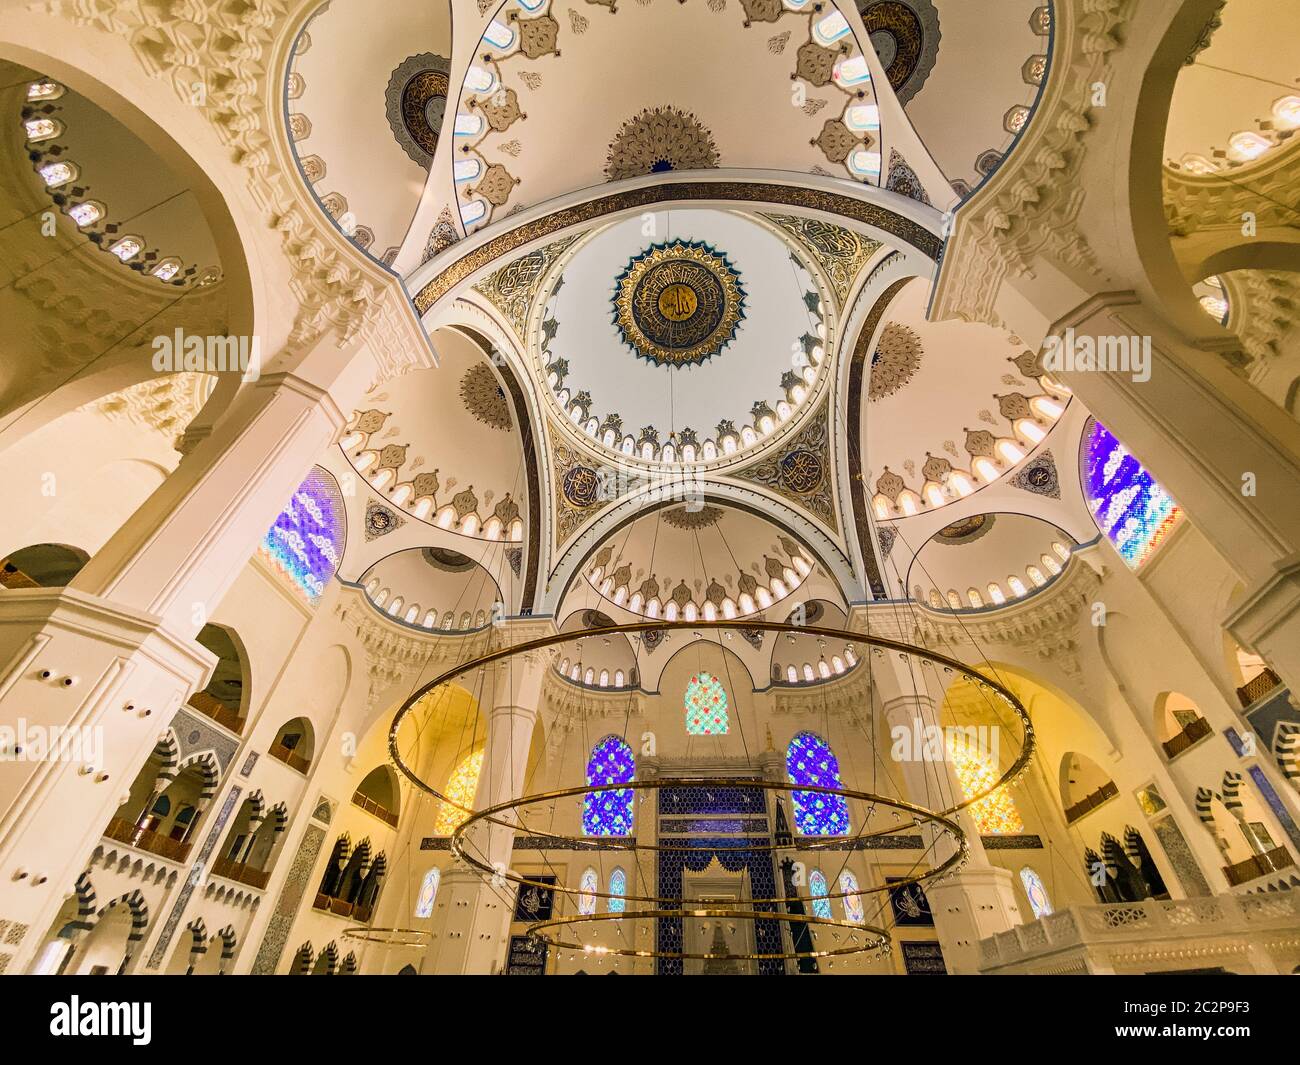 30 octobre 2019. Istanbul. Vue sur le dôme à l'intérieur de la mosquée Camlica d'Istanbul. Mosquée Camlica turc Camlica Camii. Caml. Buyuk Banque D'Images